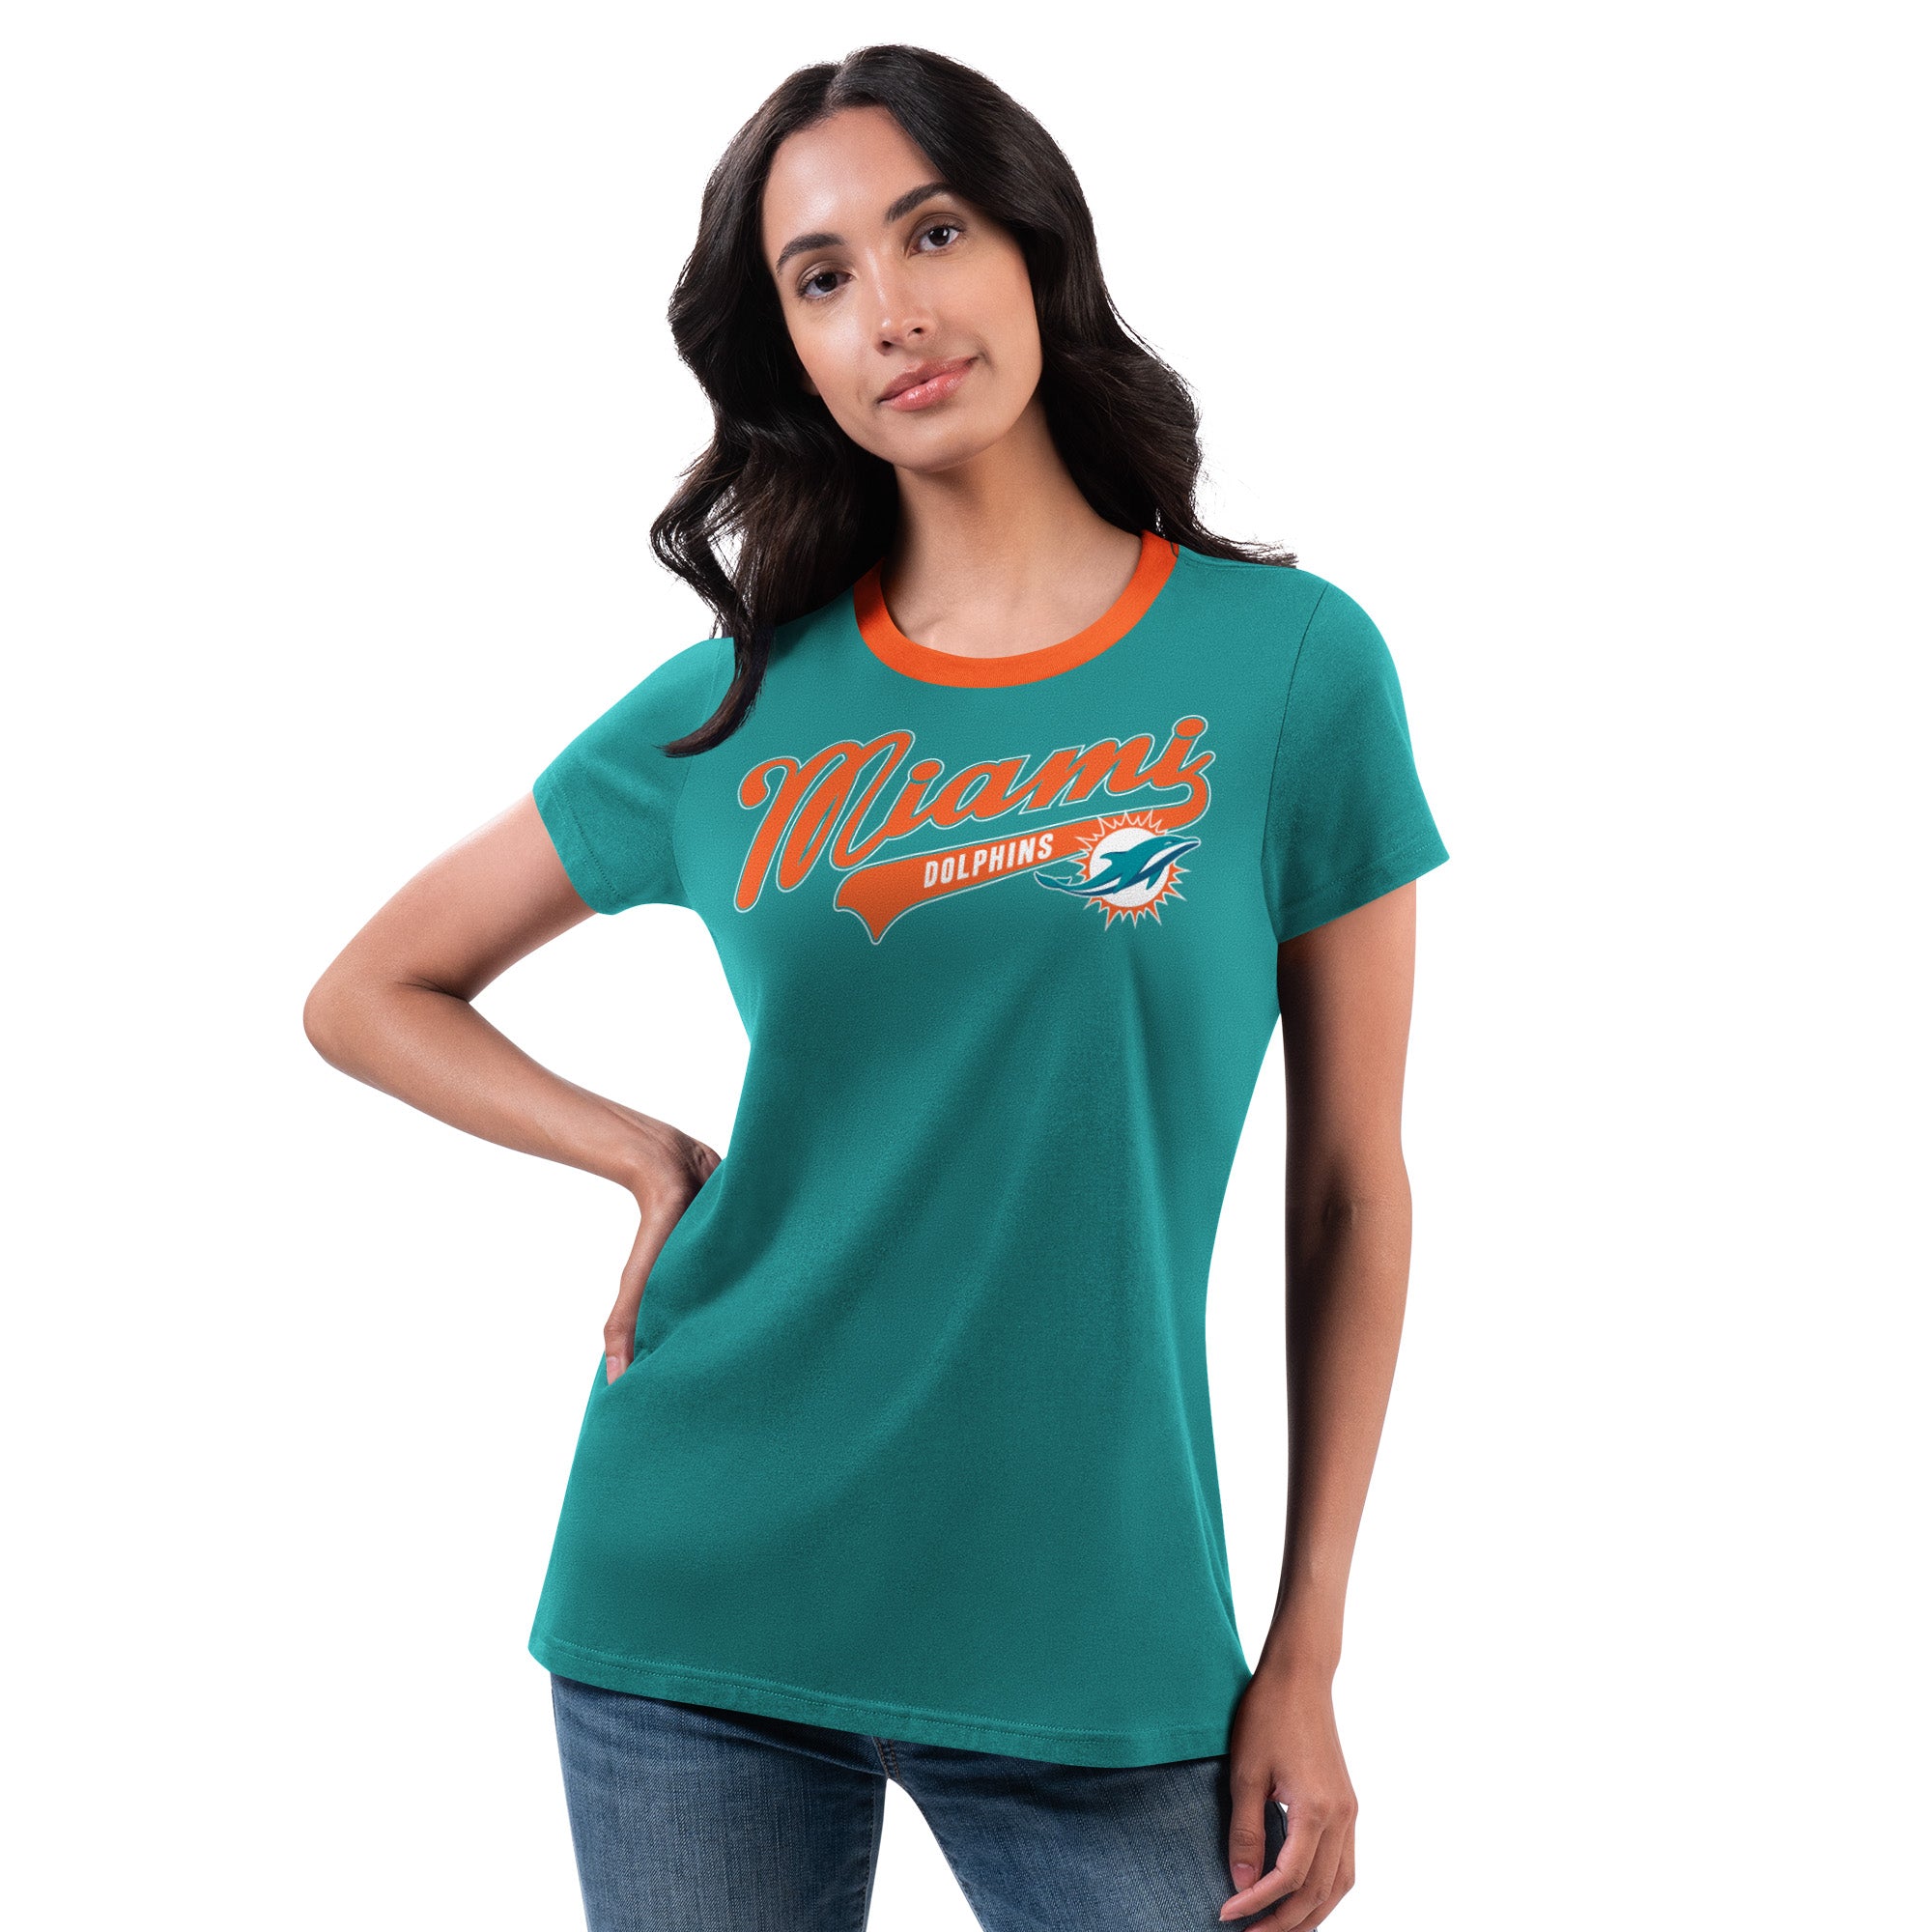 Miami Dolphins G-III 4Her Women's Recruit Ringer T-Shirt - Aqua